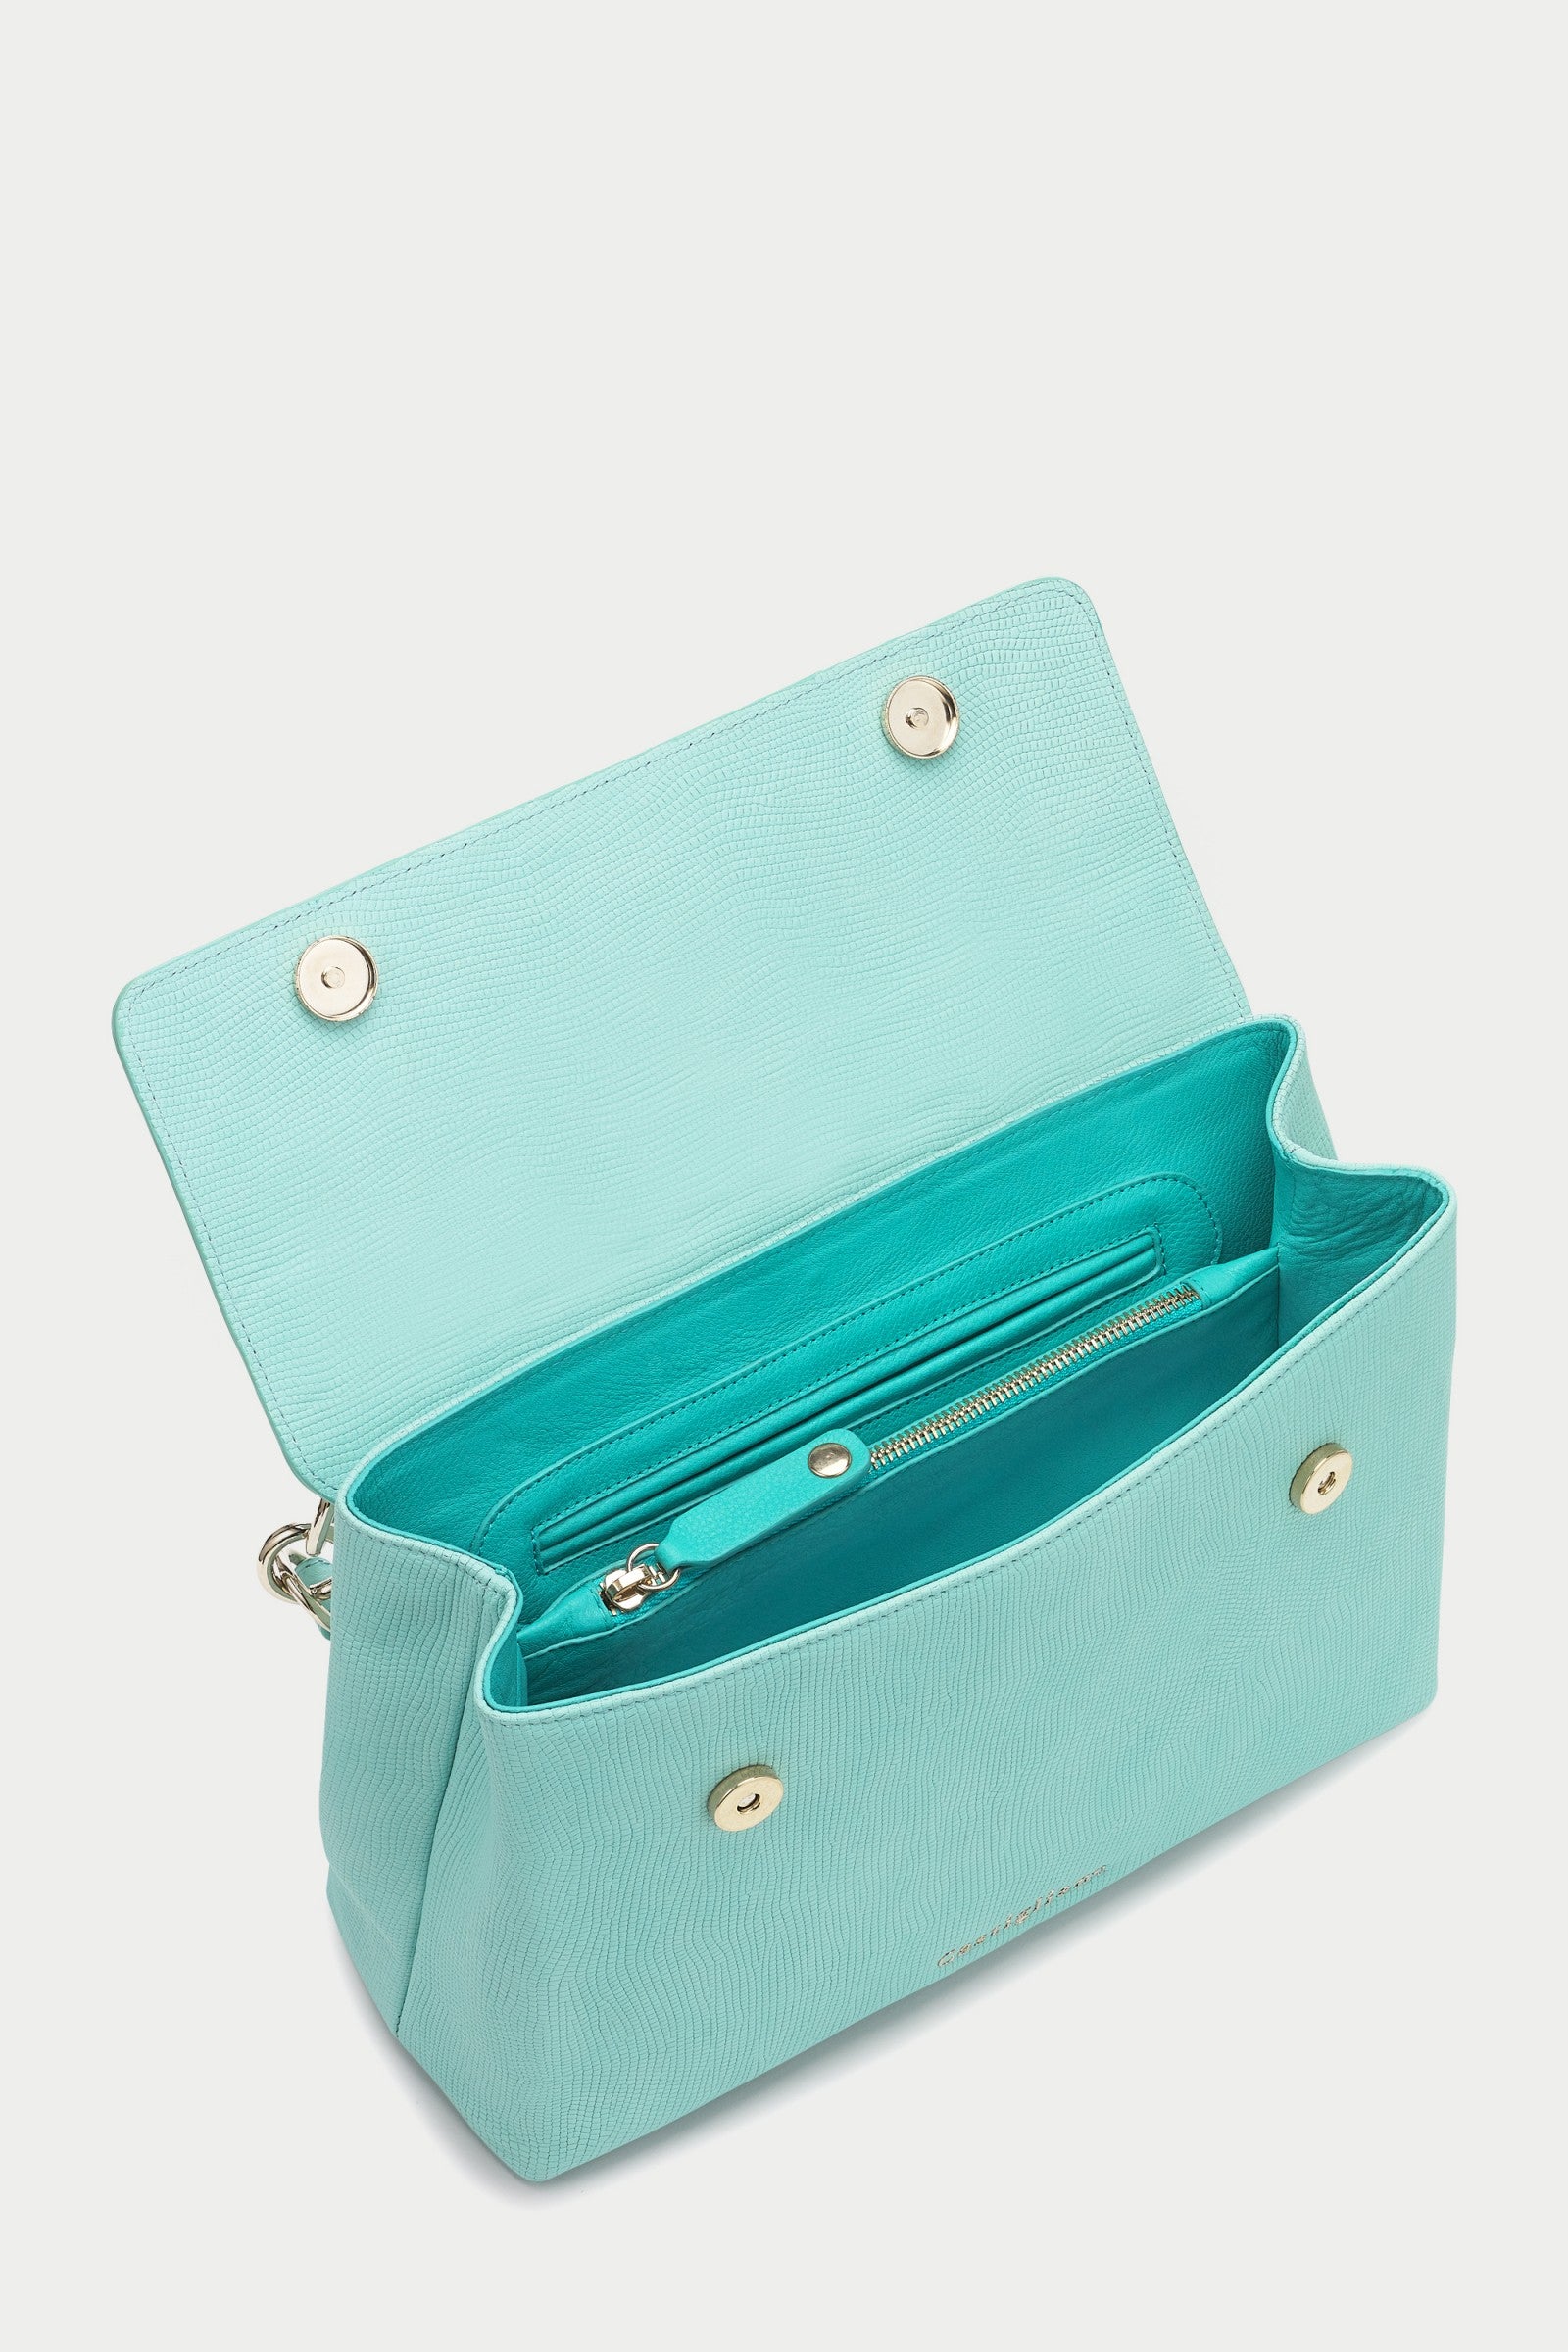 Briella BLUE LUCE Leather Handbag